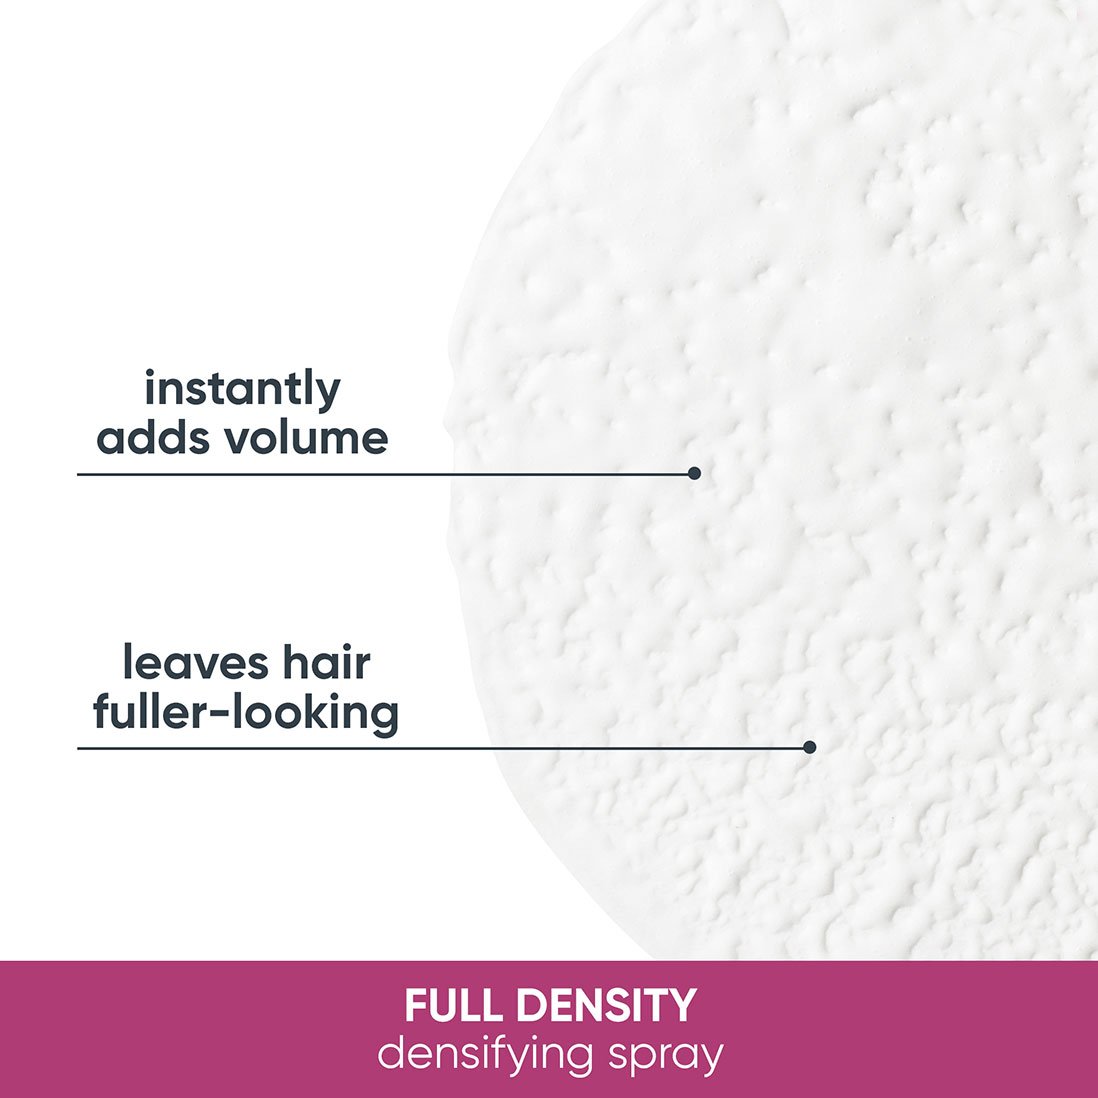 Full Density Densifying Spray Benefits